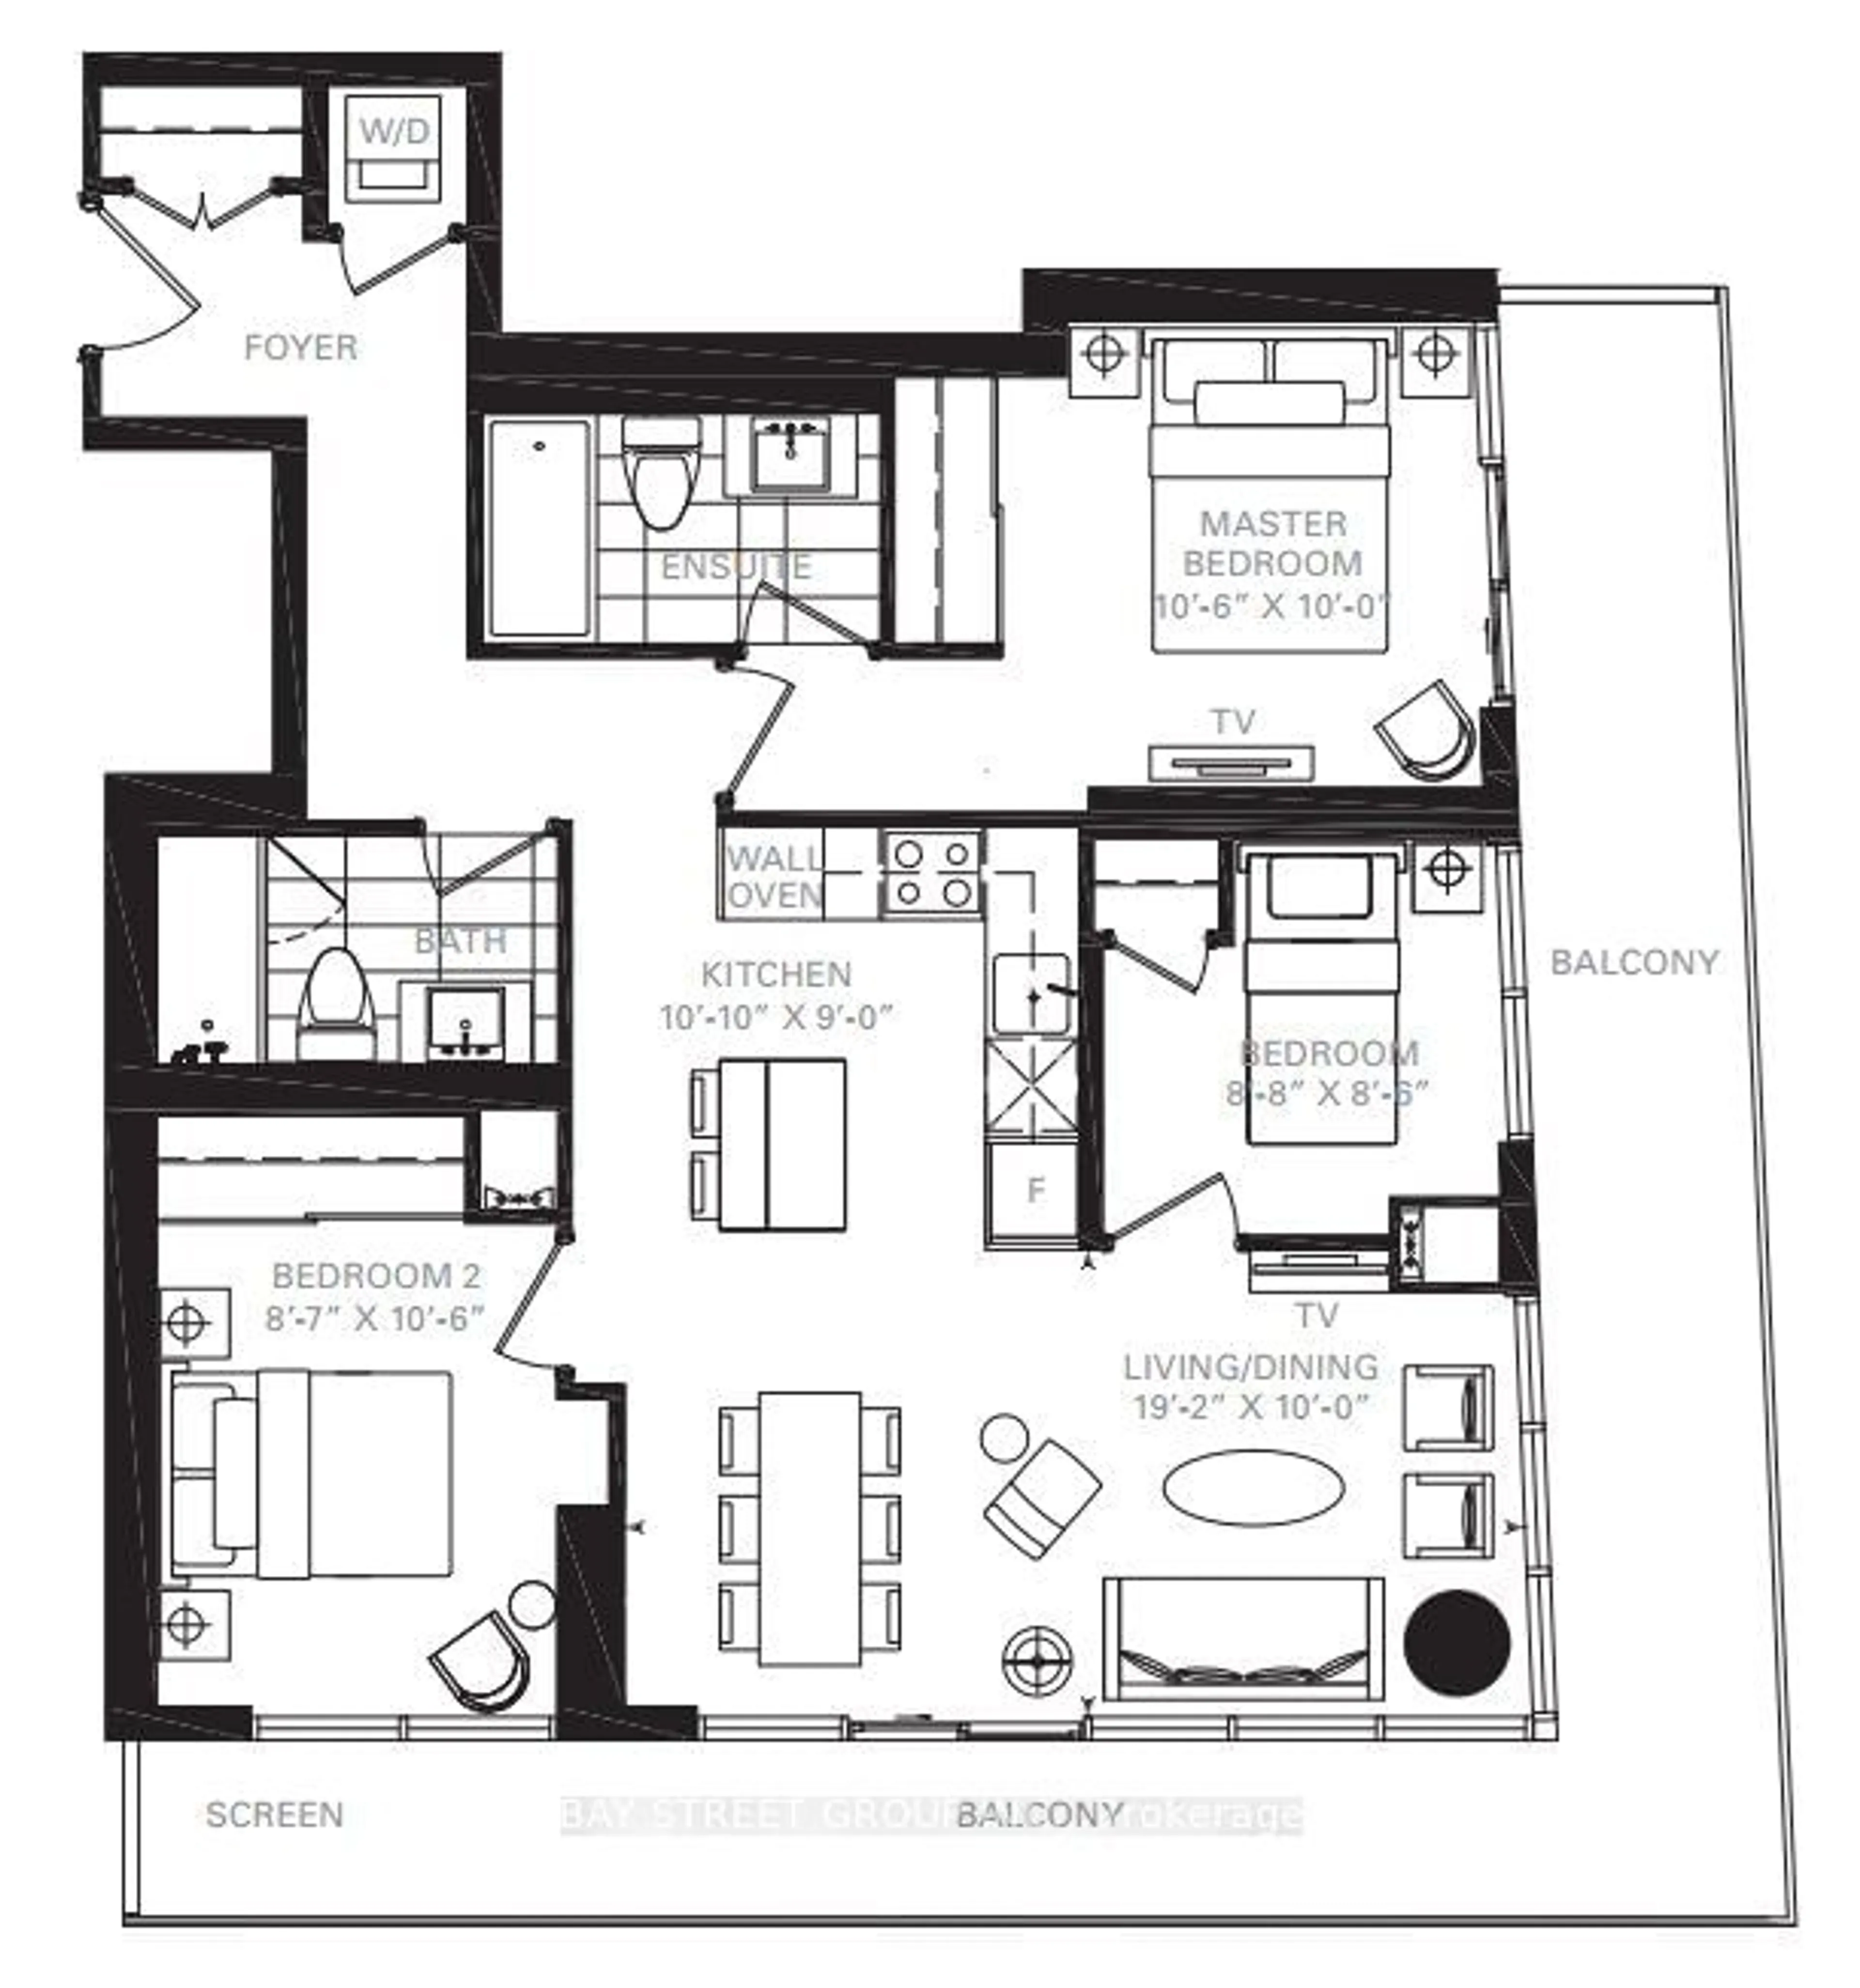 Floor plan for 115 Blue Jays Way #1602, Toronto Ontario M5V 0N4